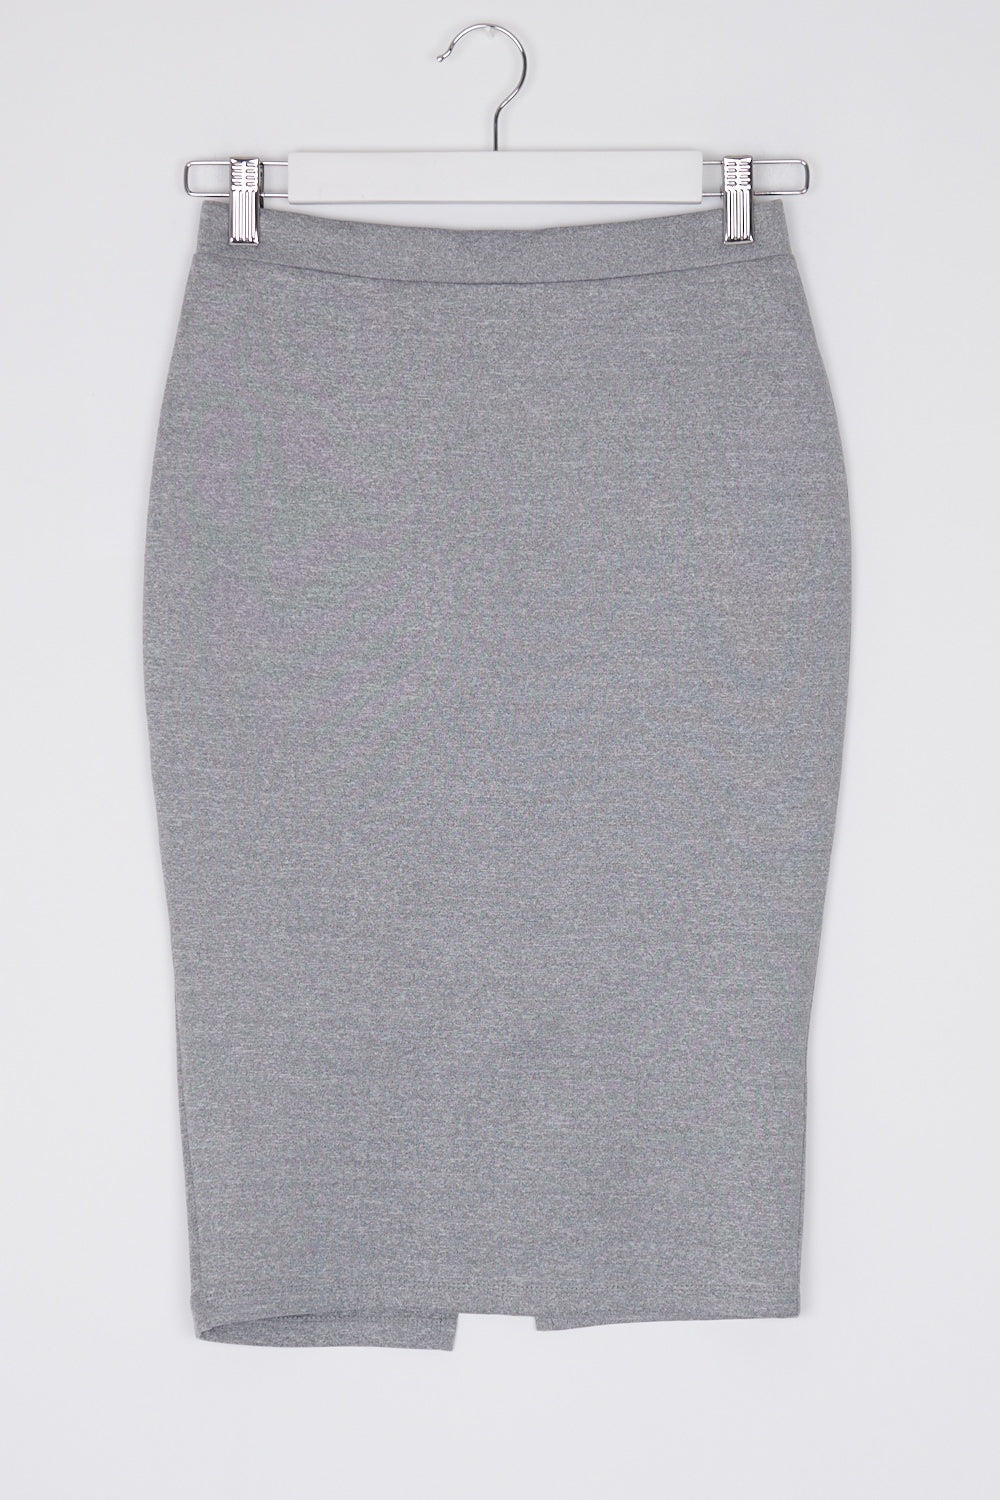 Bluejuice Grey Bodycon Skirt 8